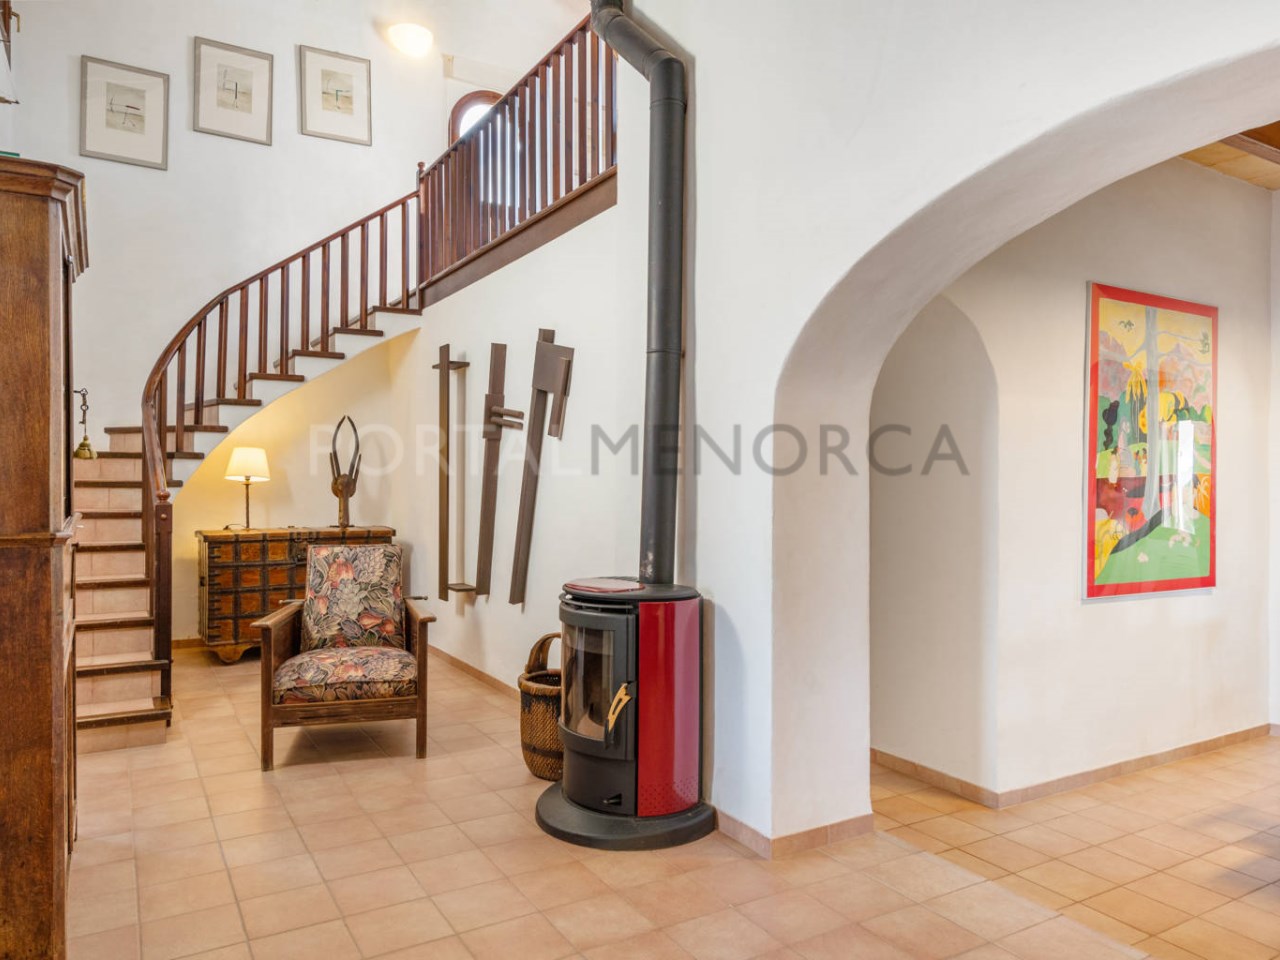 Villa Cala Morell venta vistas mar